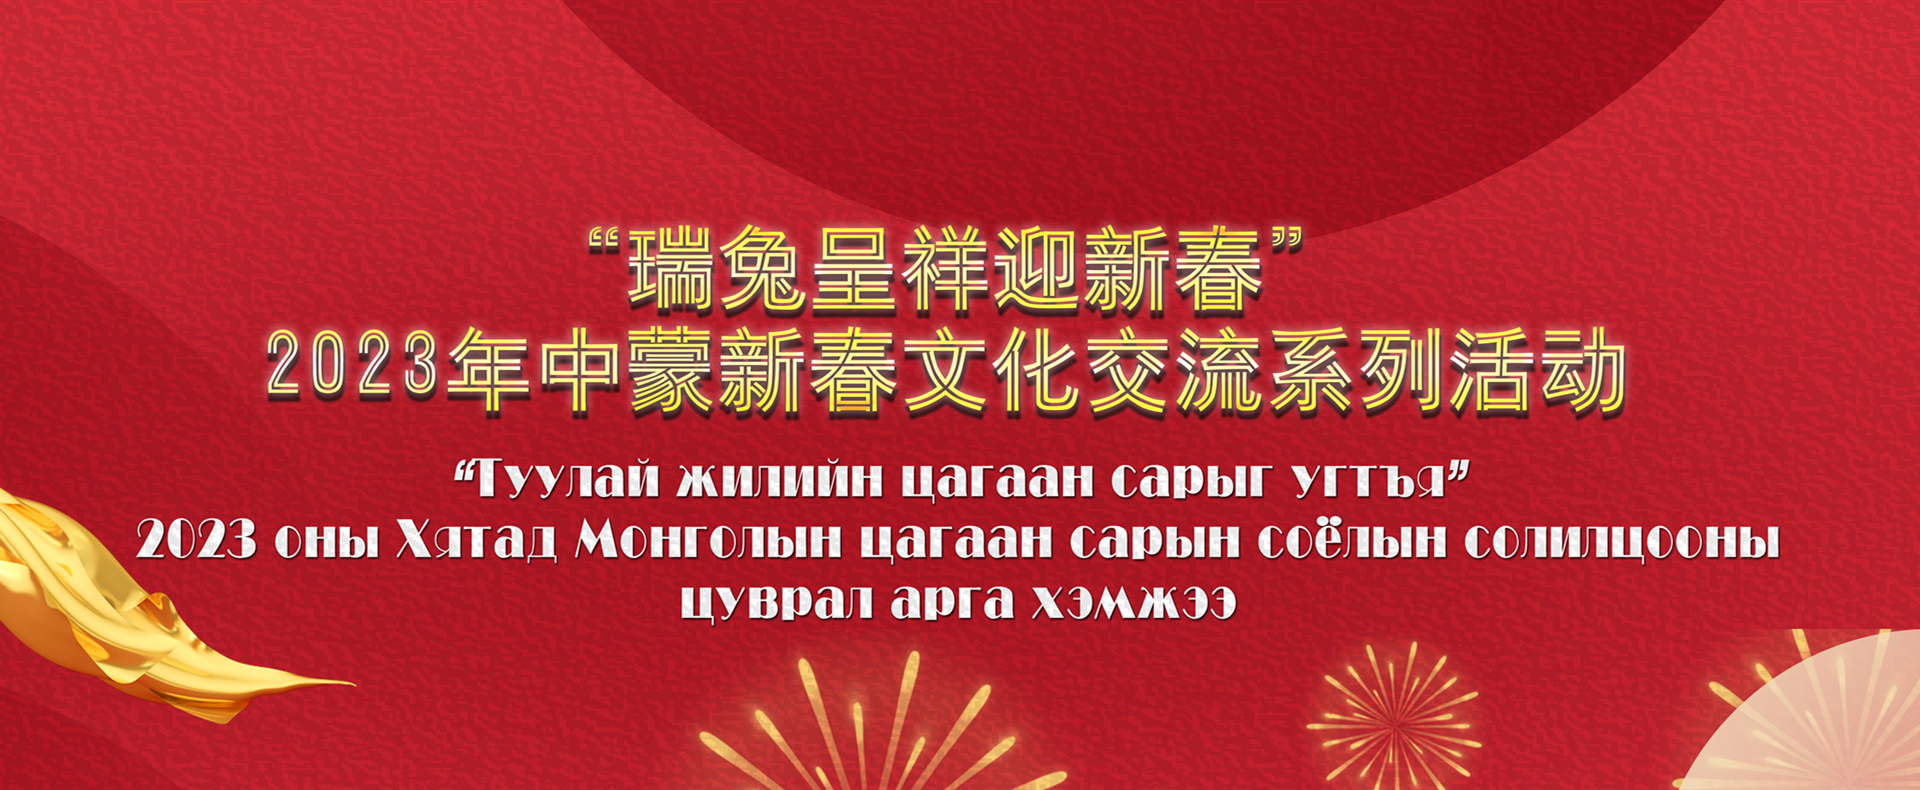 China, Mongolia launch online New Year's exchange activities